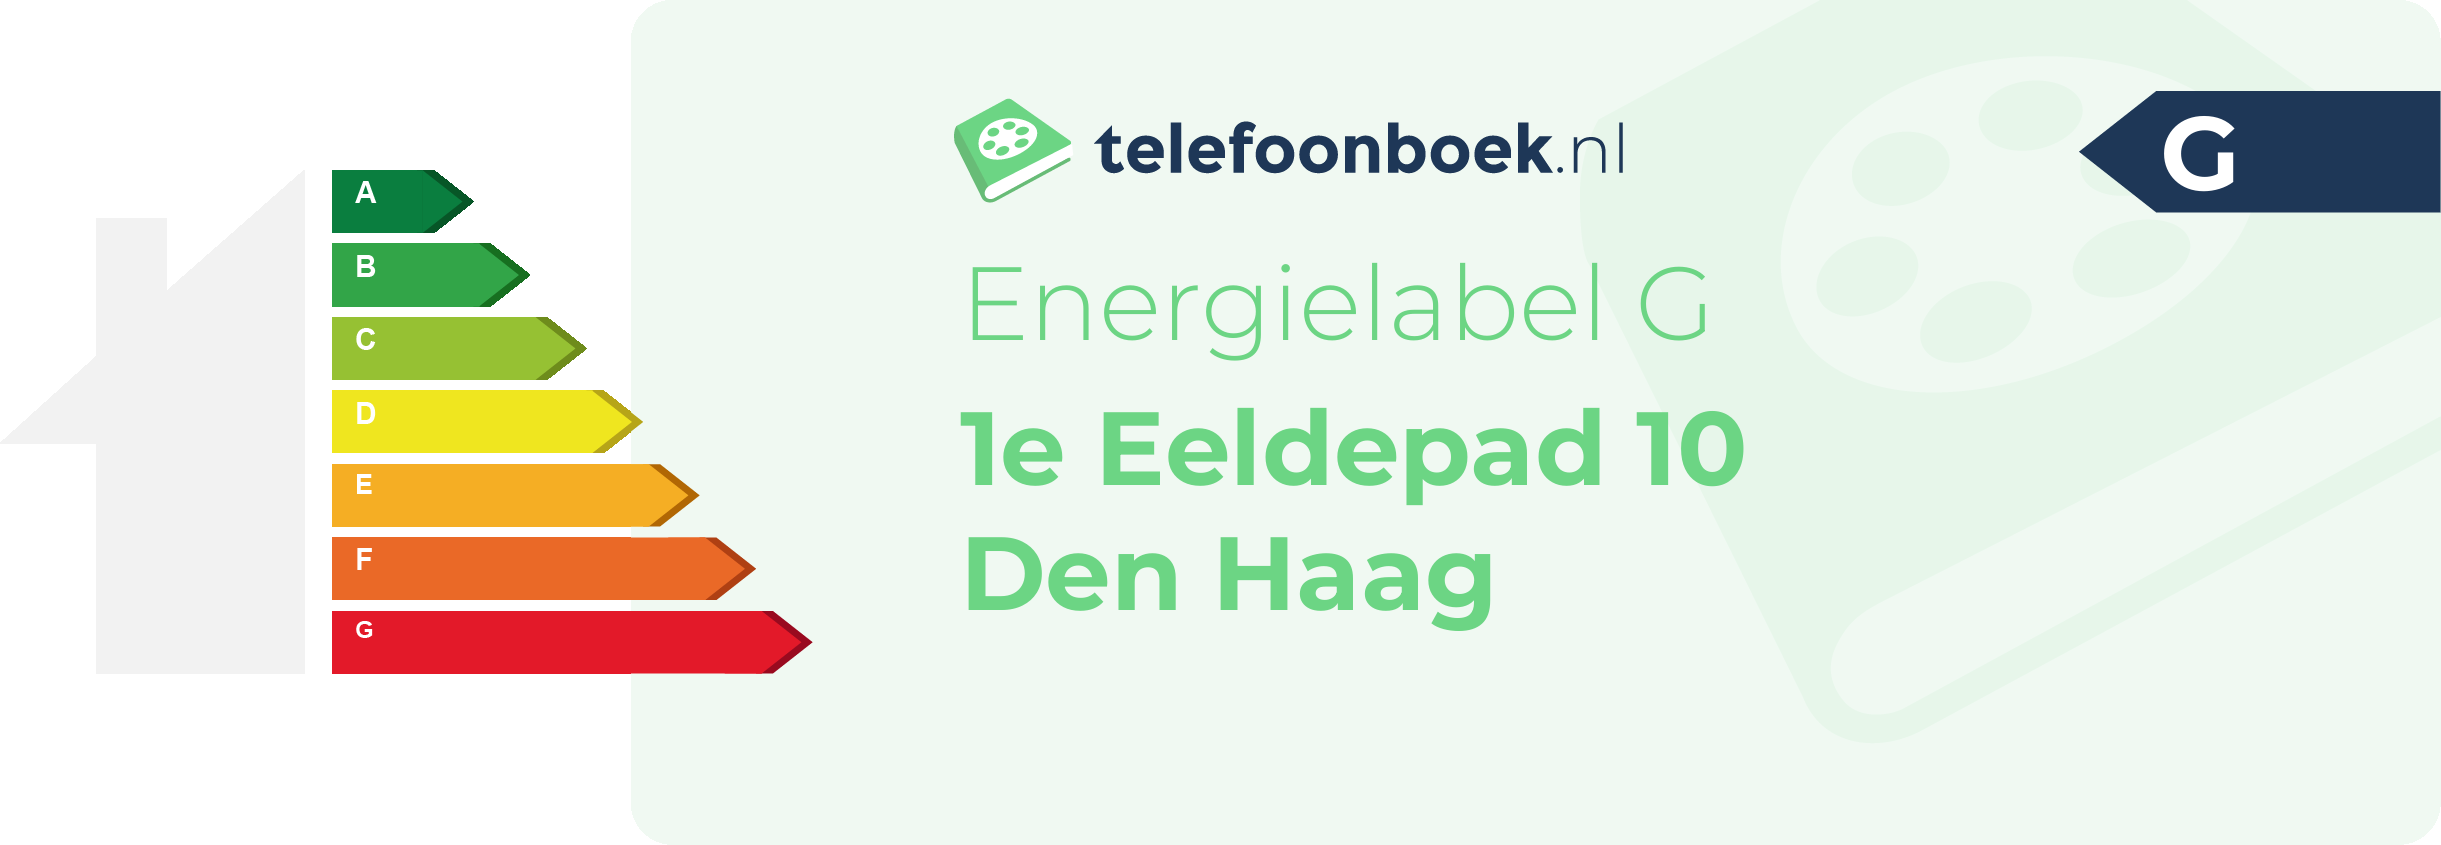 Energielabel 1e Eeldepad 10 Den Haag